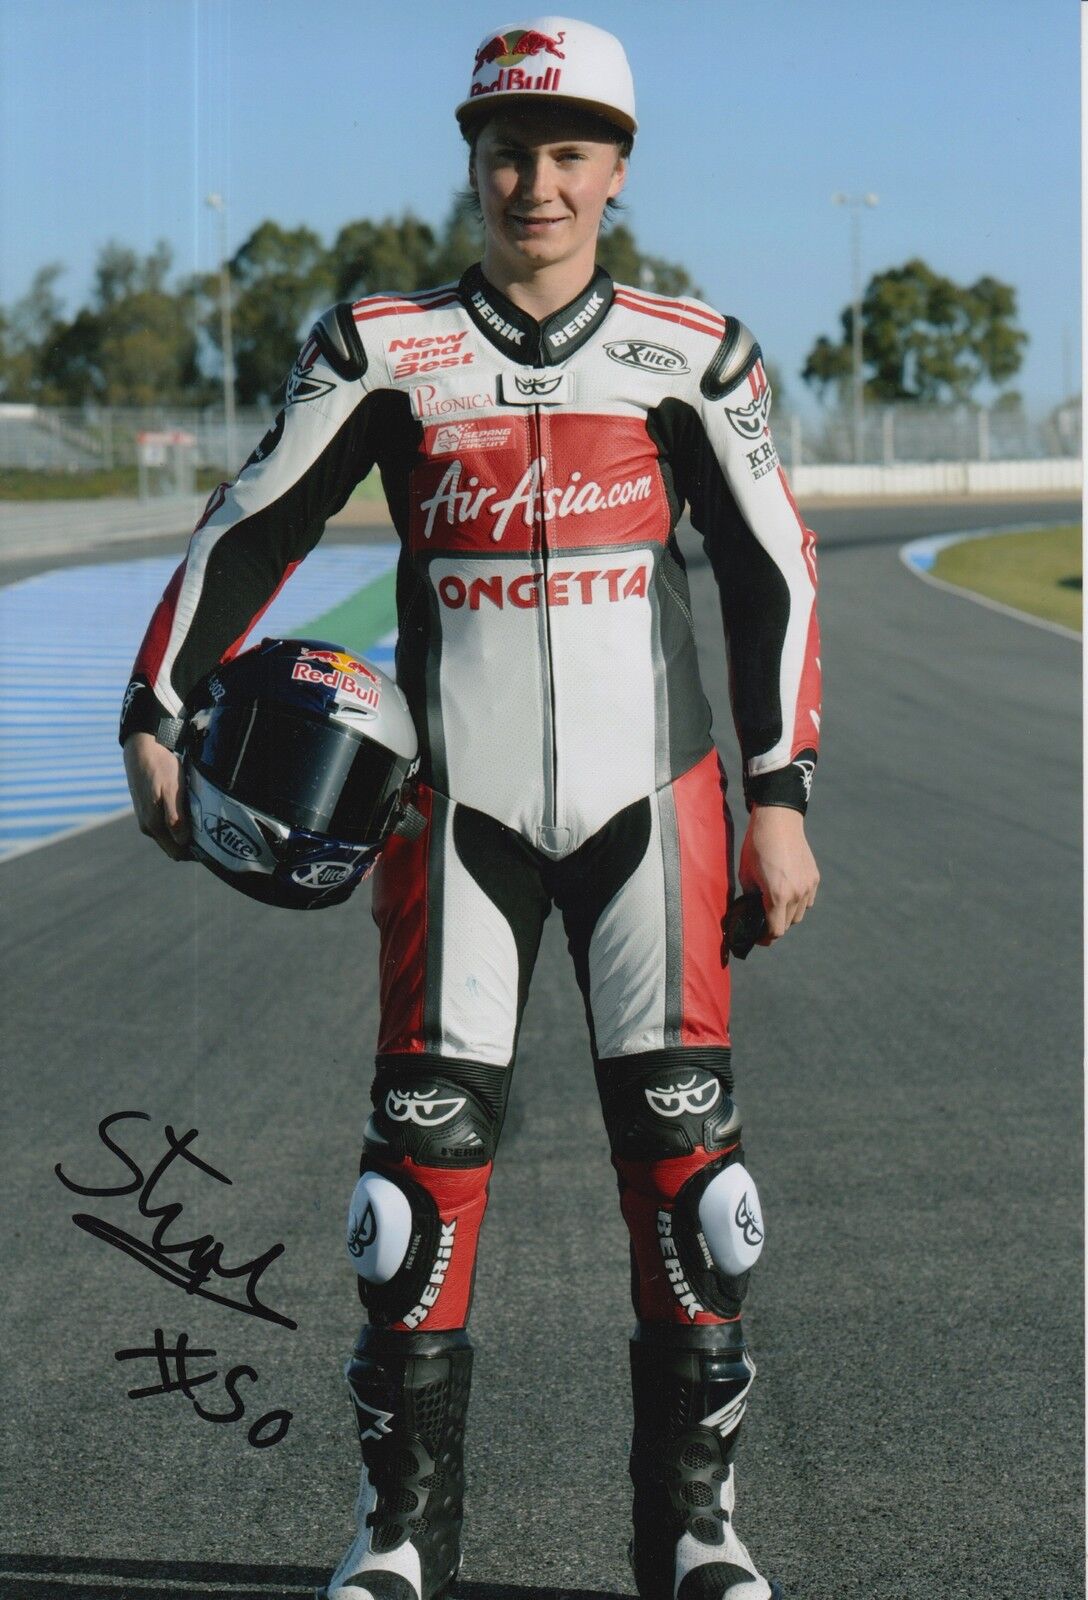 Sturla Fagerhaug Hand Signed 12x8 Photo Poster painting MotoGP.